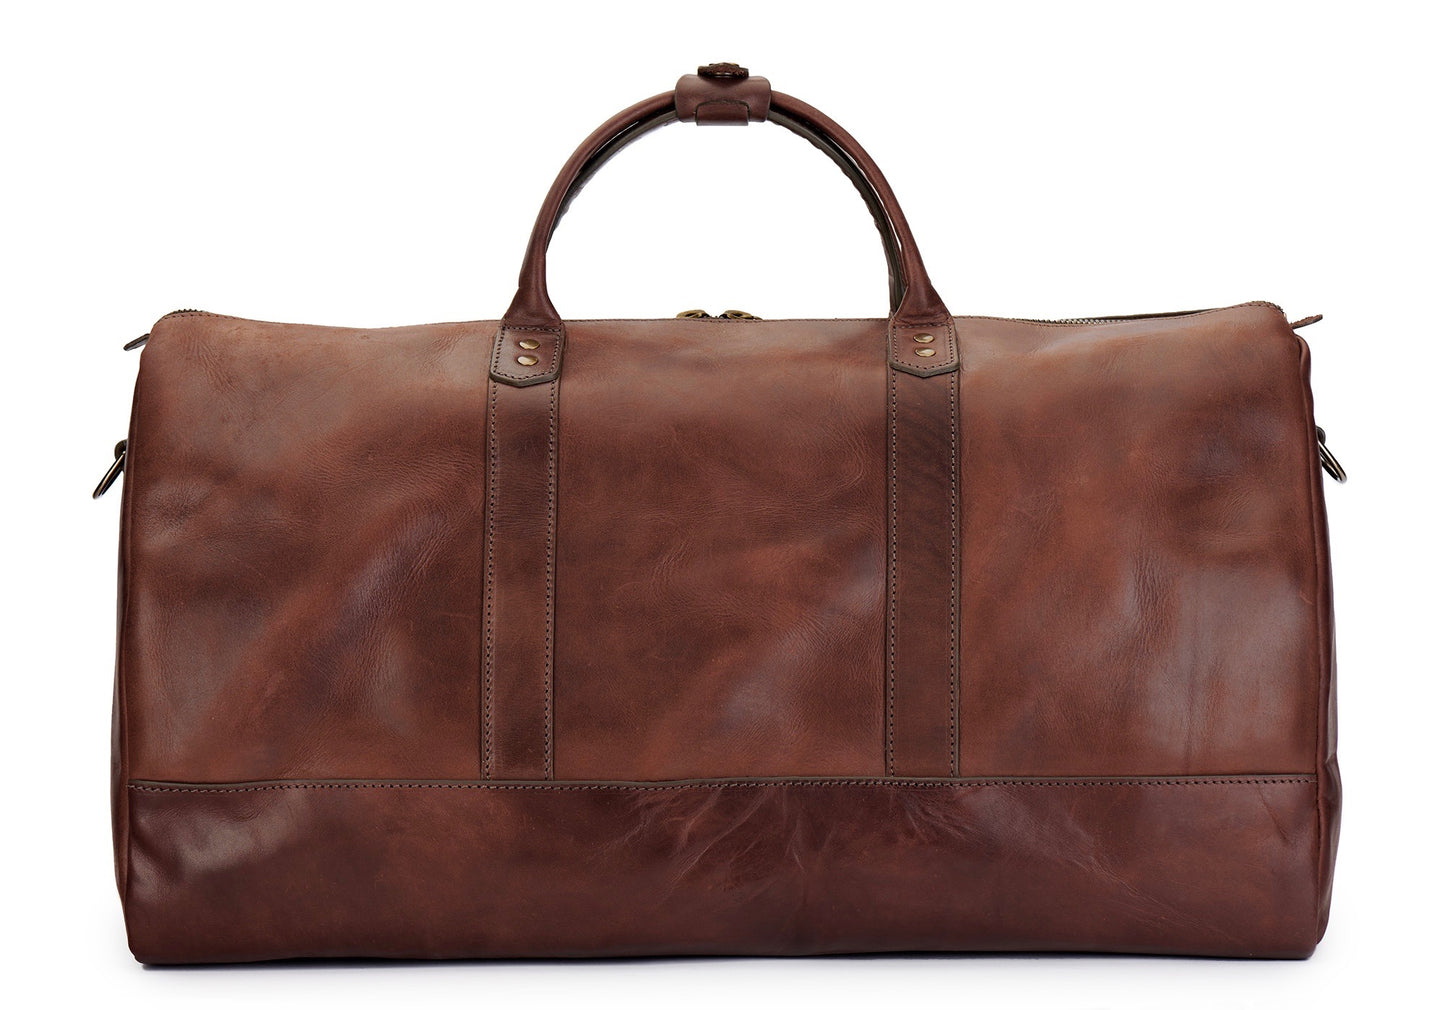 Jackson Wayne full grain leather duffle bag in vintage brown front